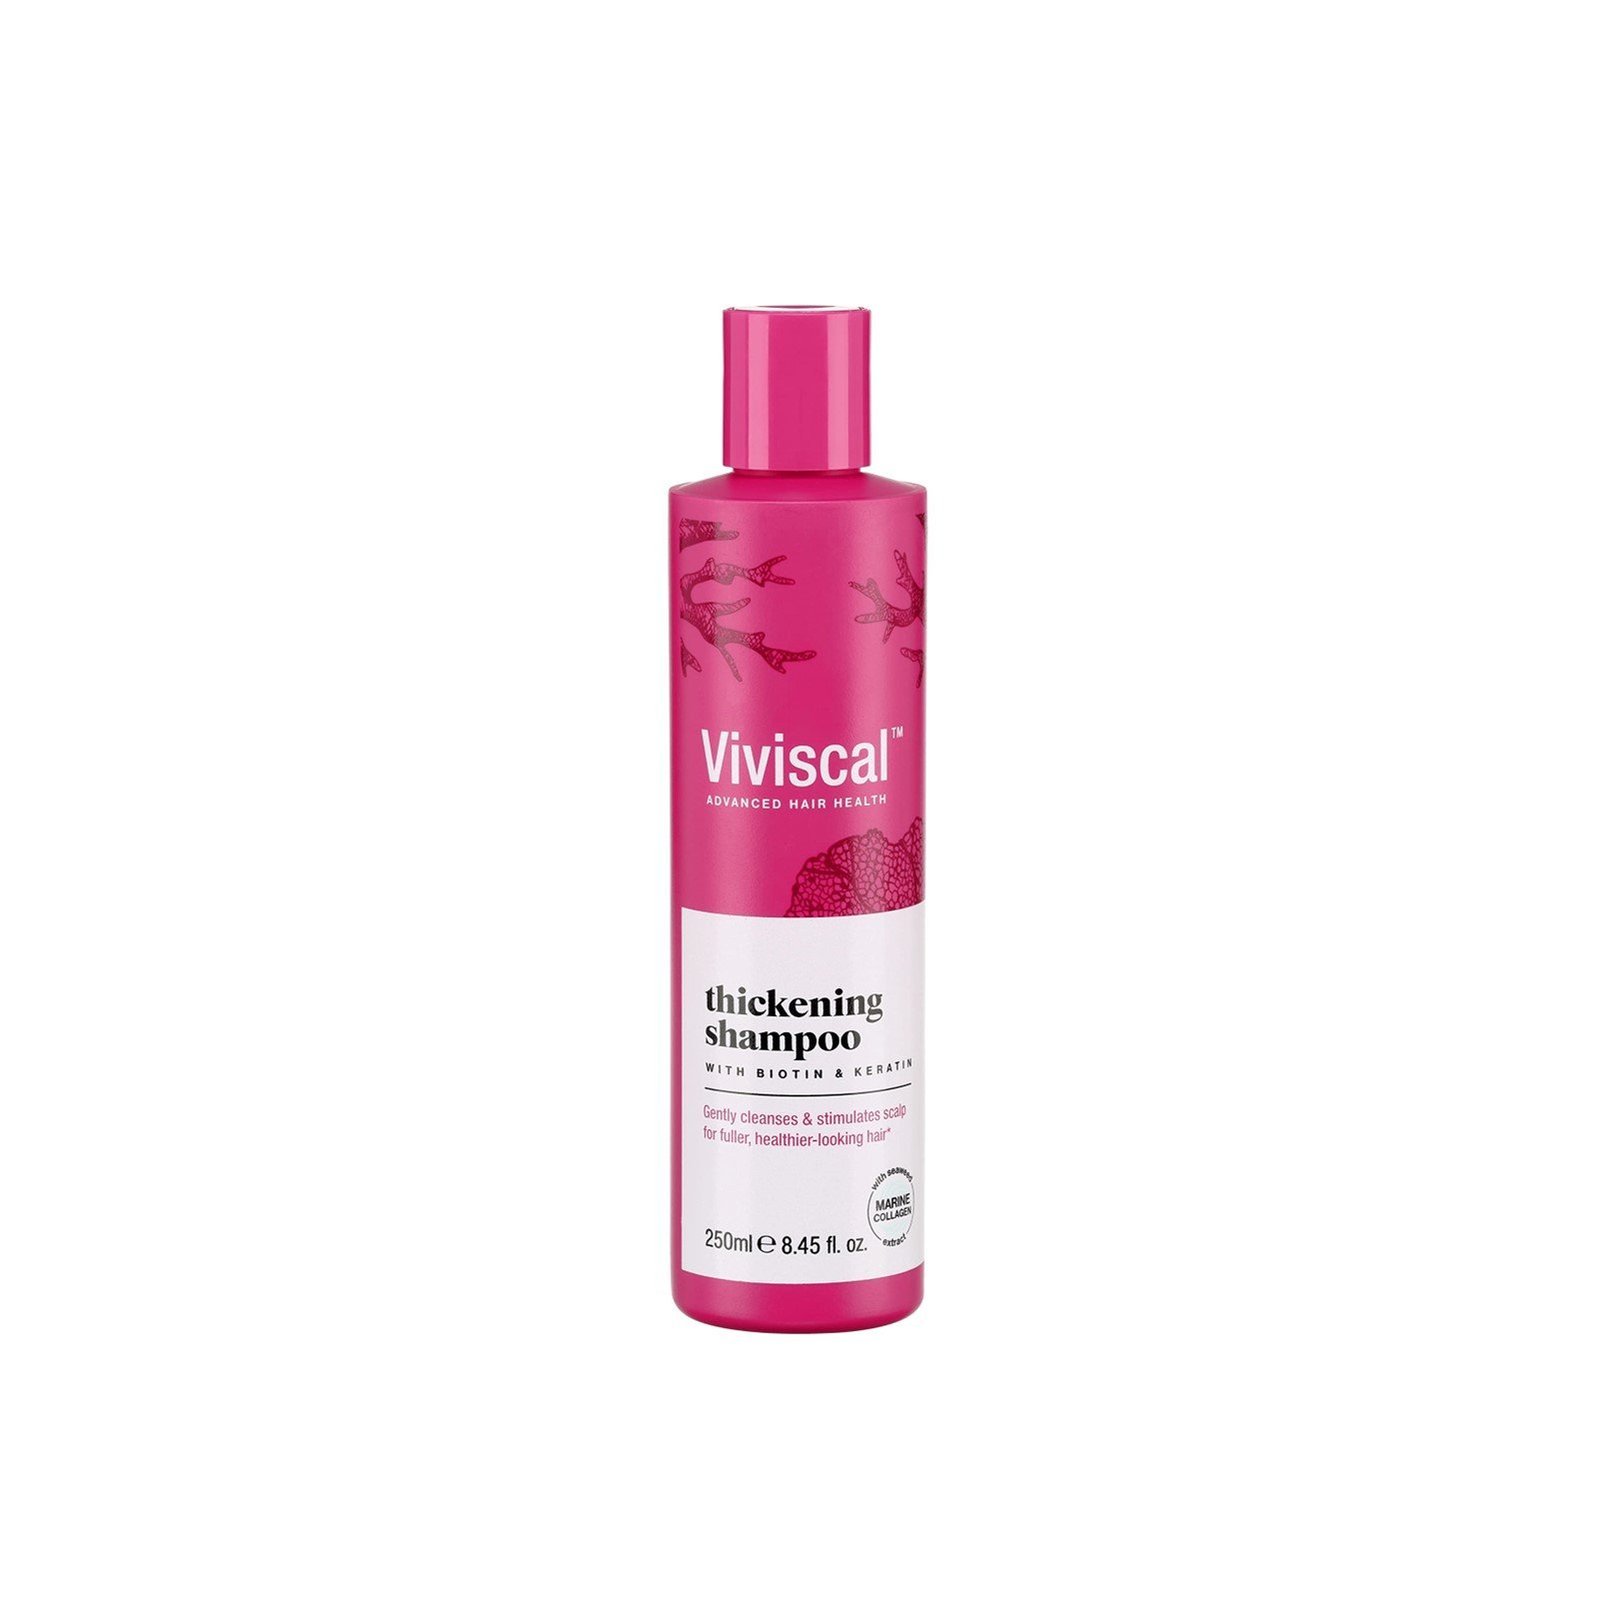 Viviscal Thickening Shampoo 250ml (8.45fl oz)